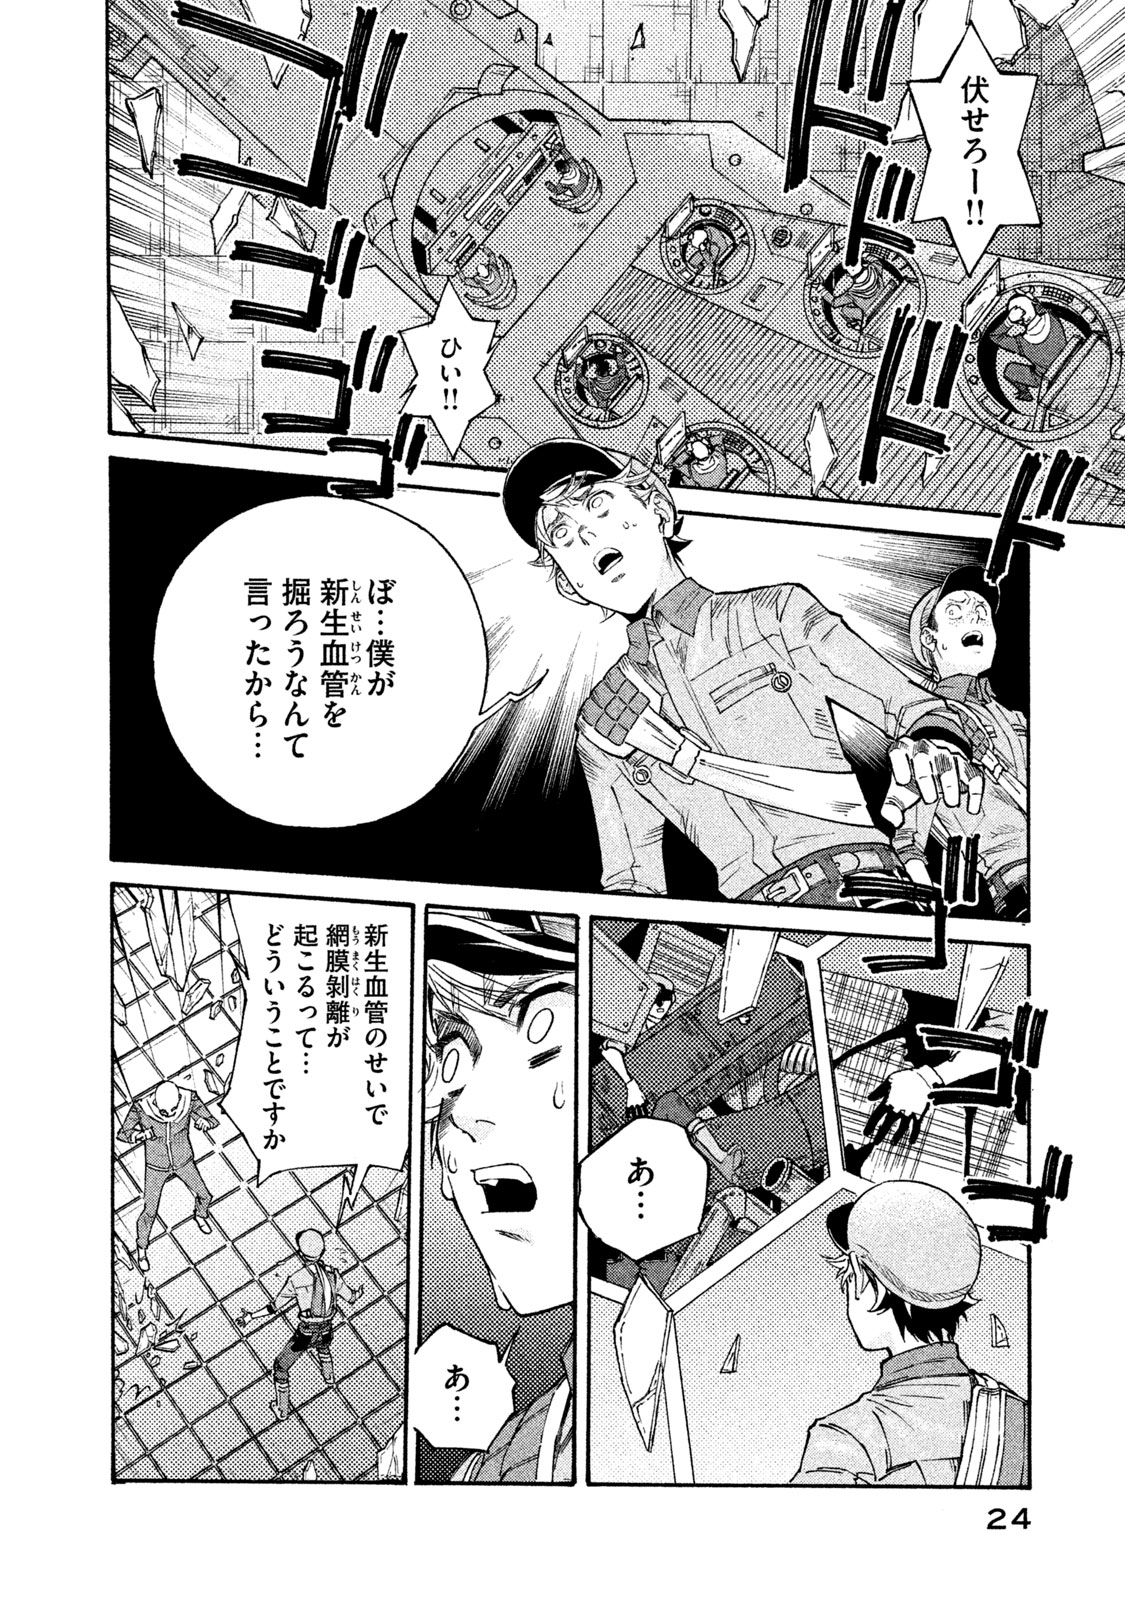 Hataraku Saibou BLACK - Chapter 26 - Page 2